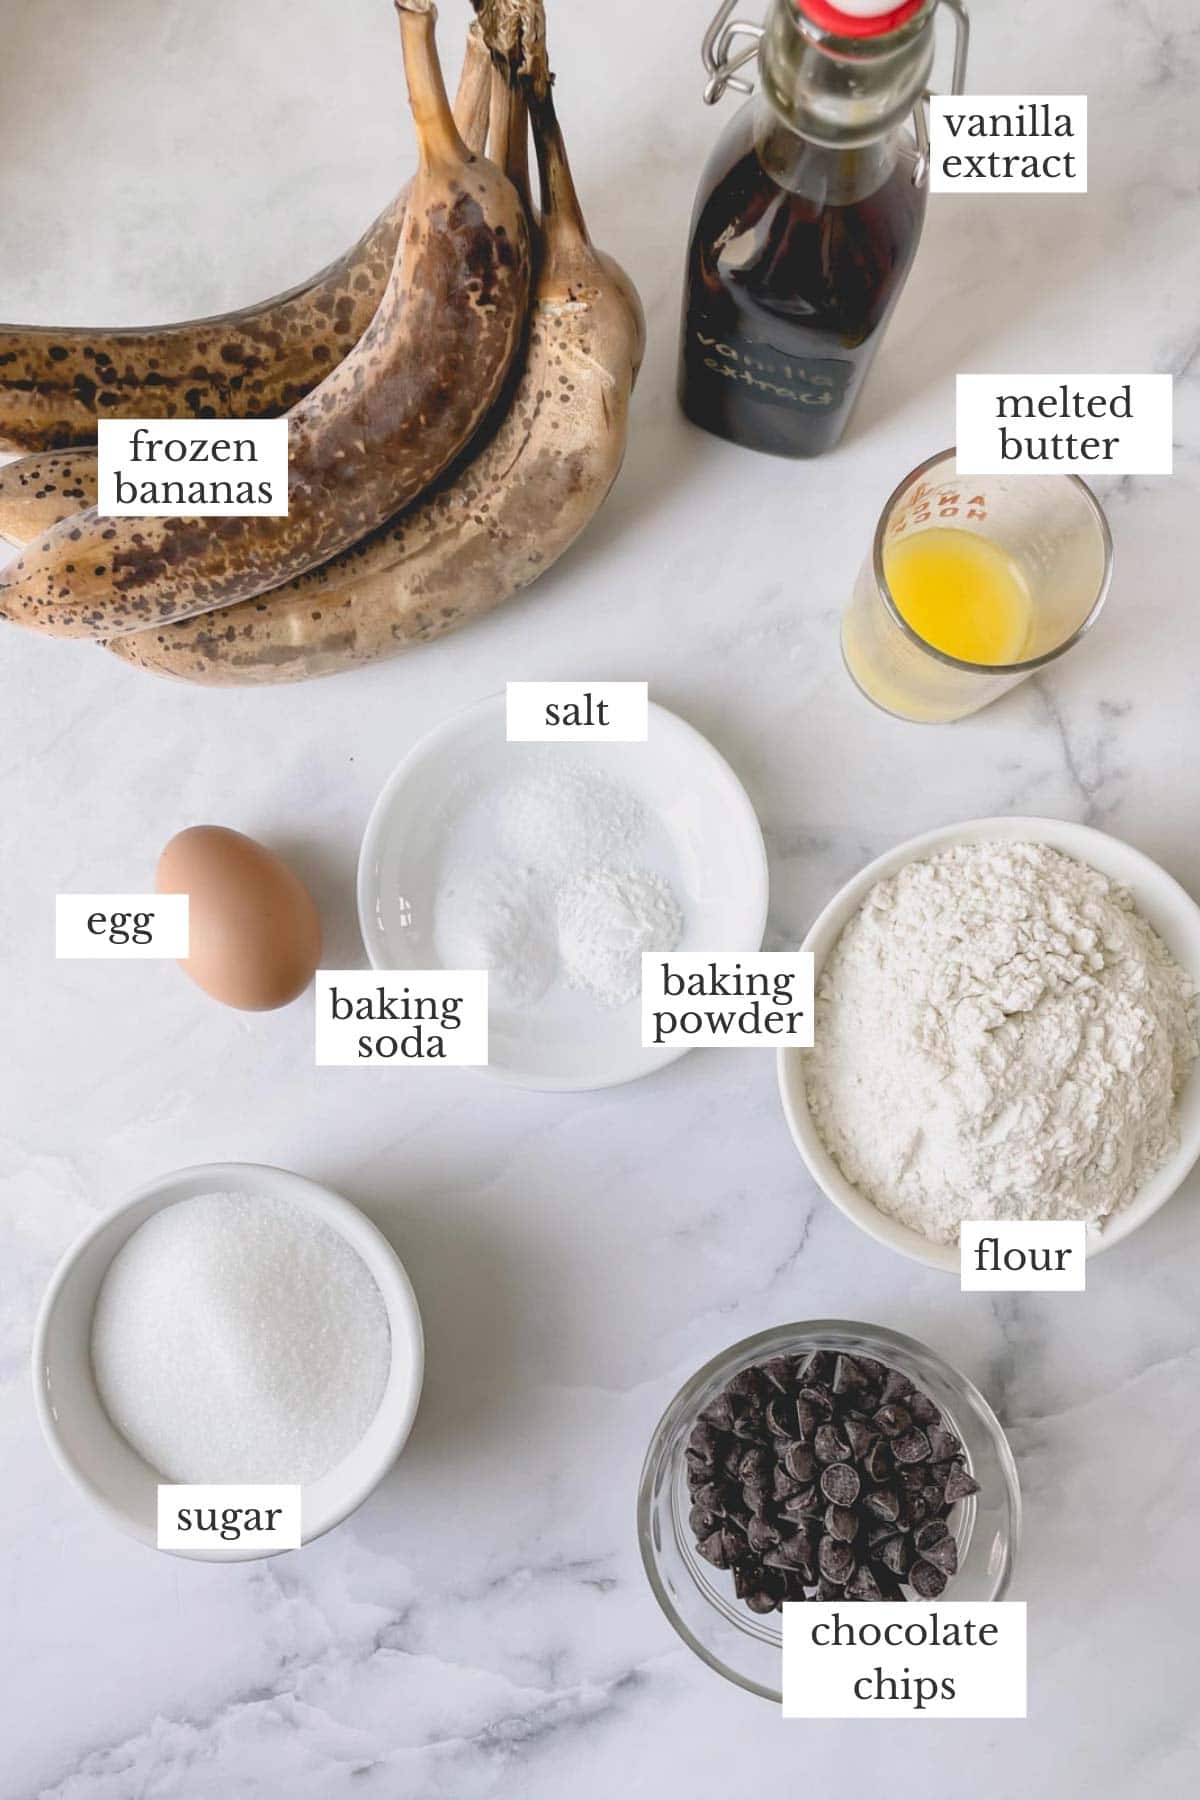 Banana muffins ingredients.